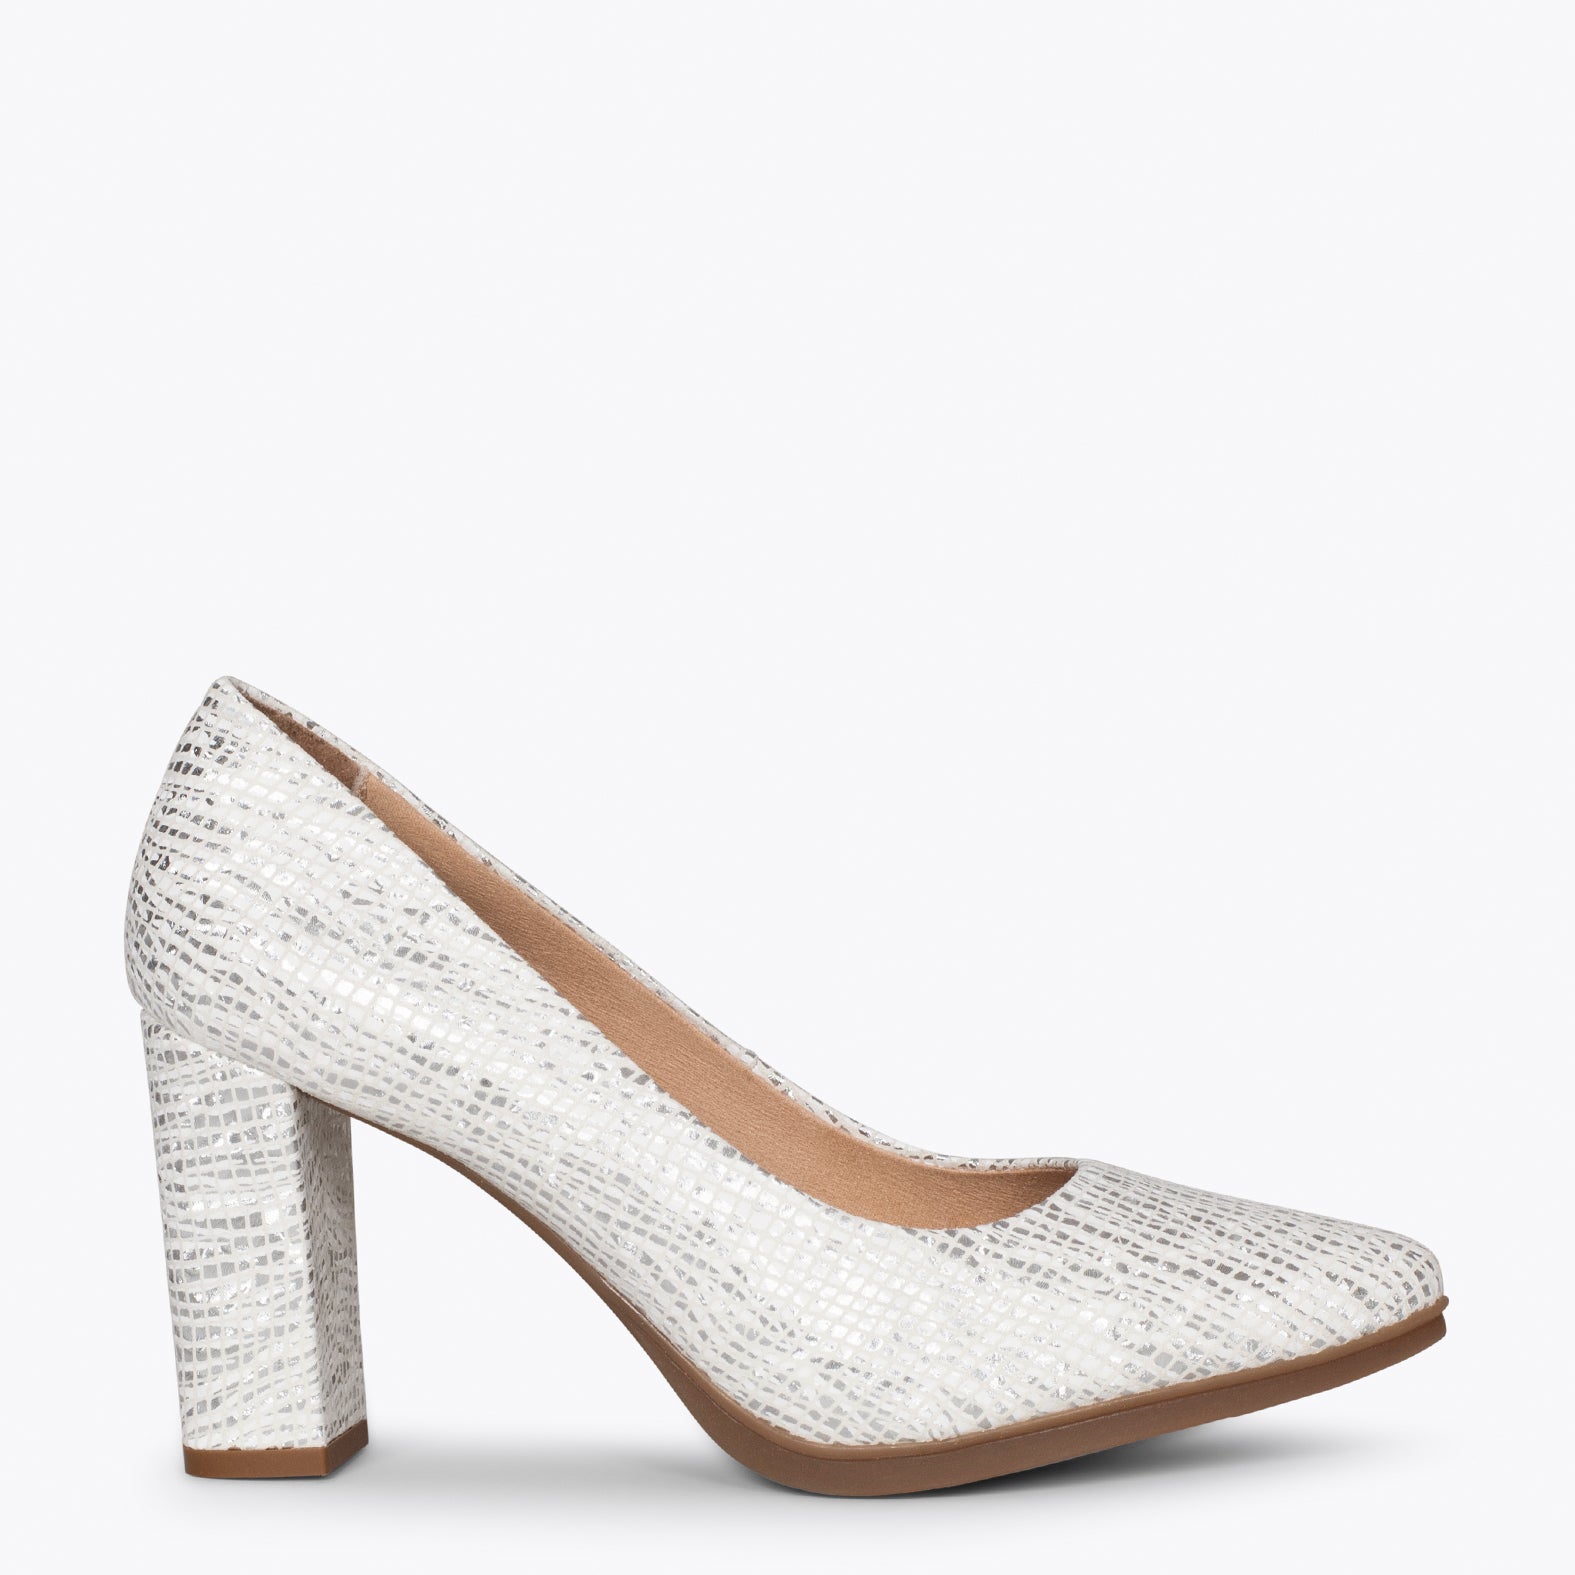 URBAN SPLASH – WHITE SILVER metallic leather high heel